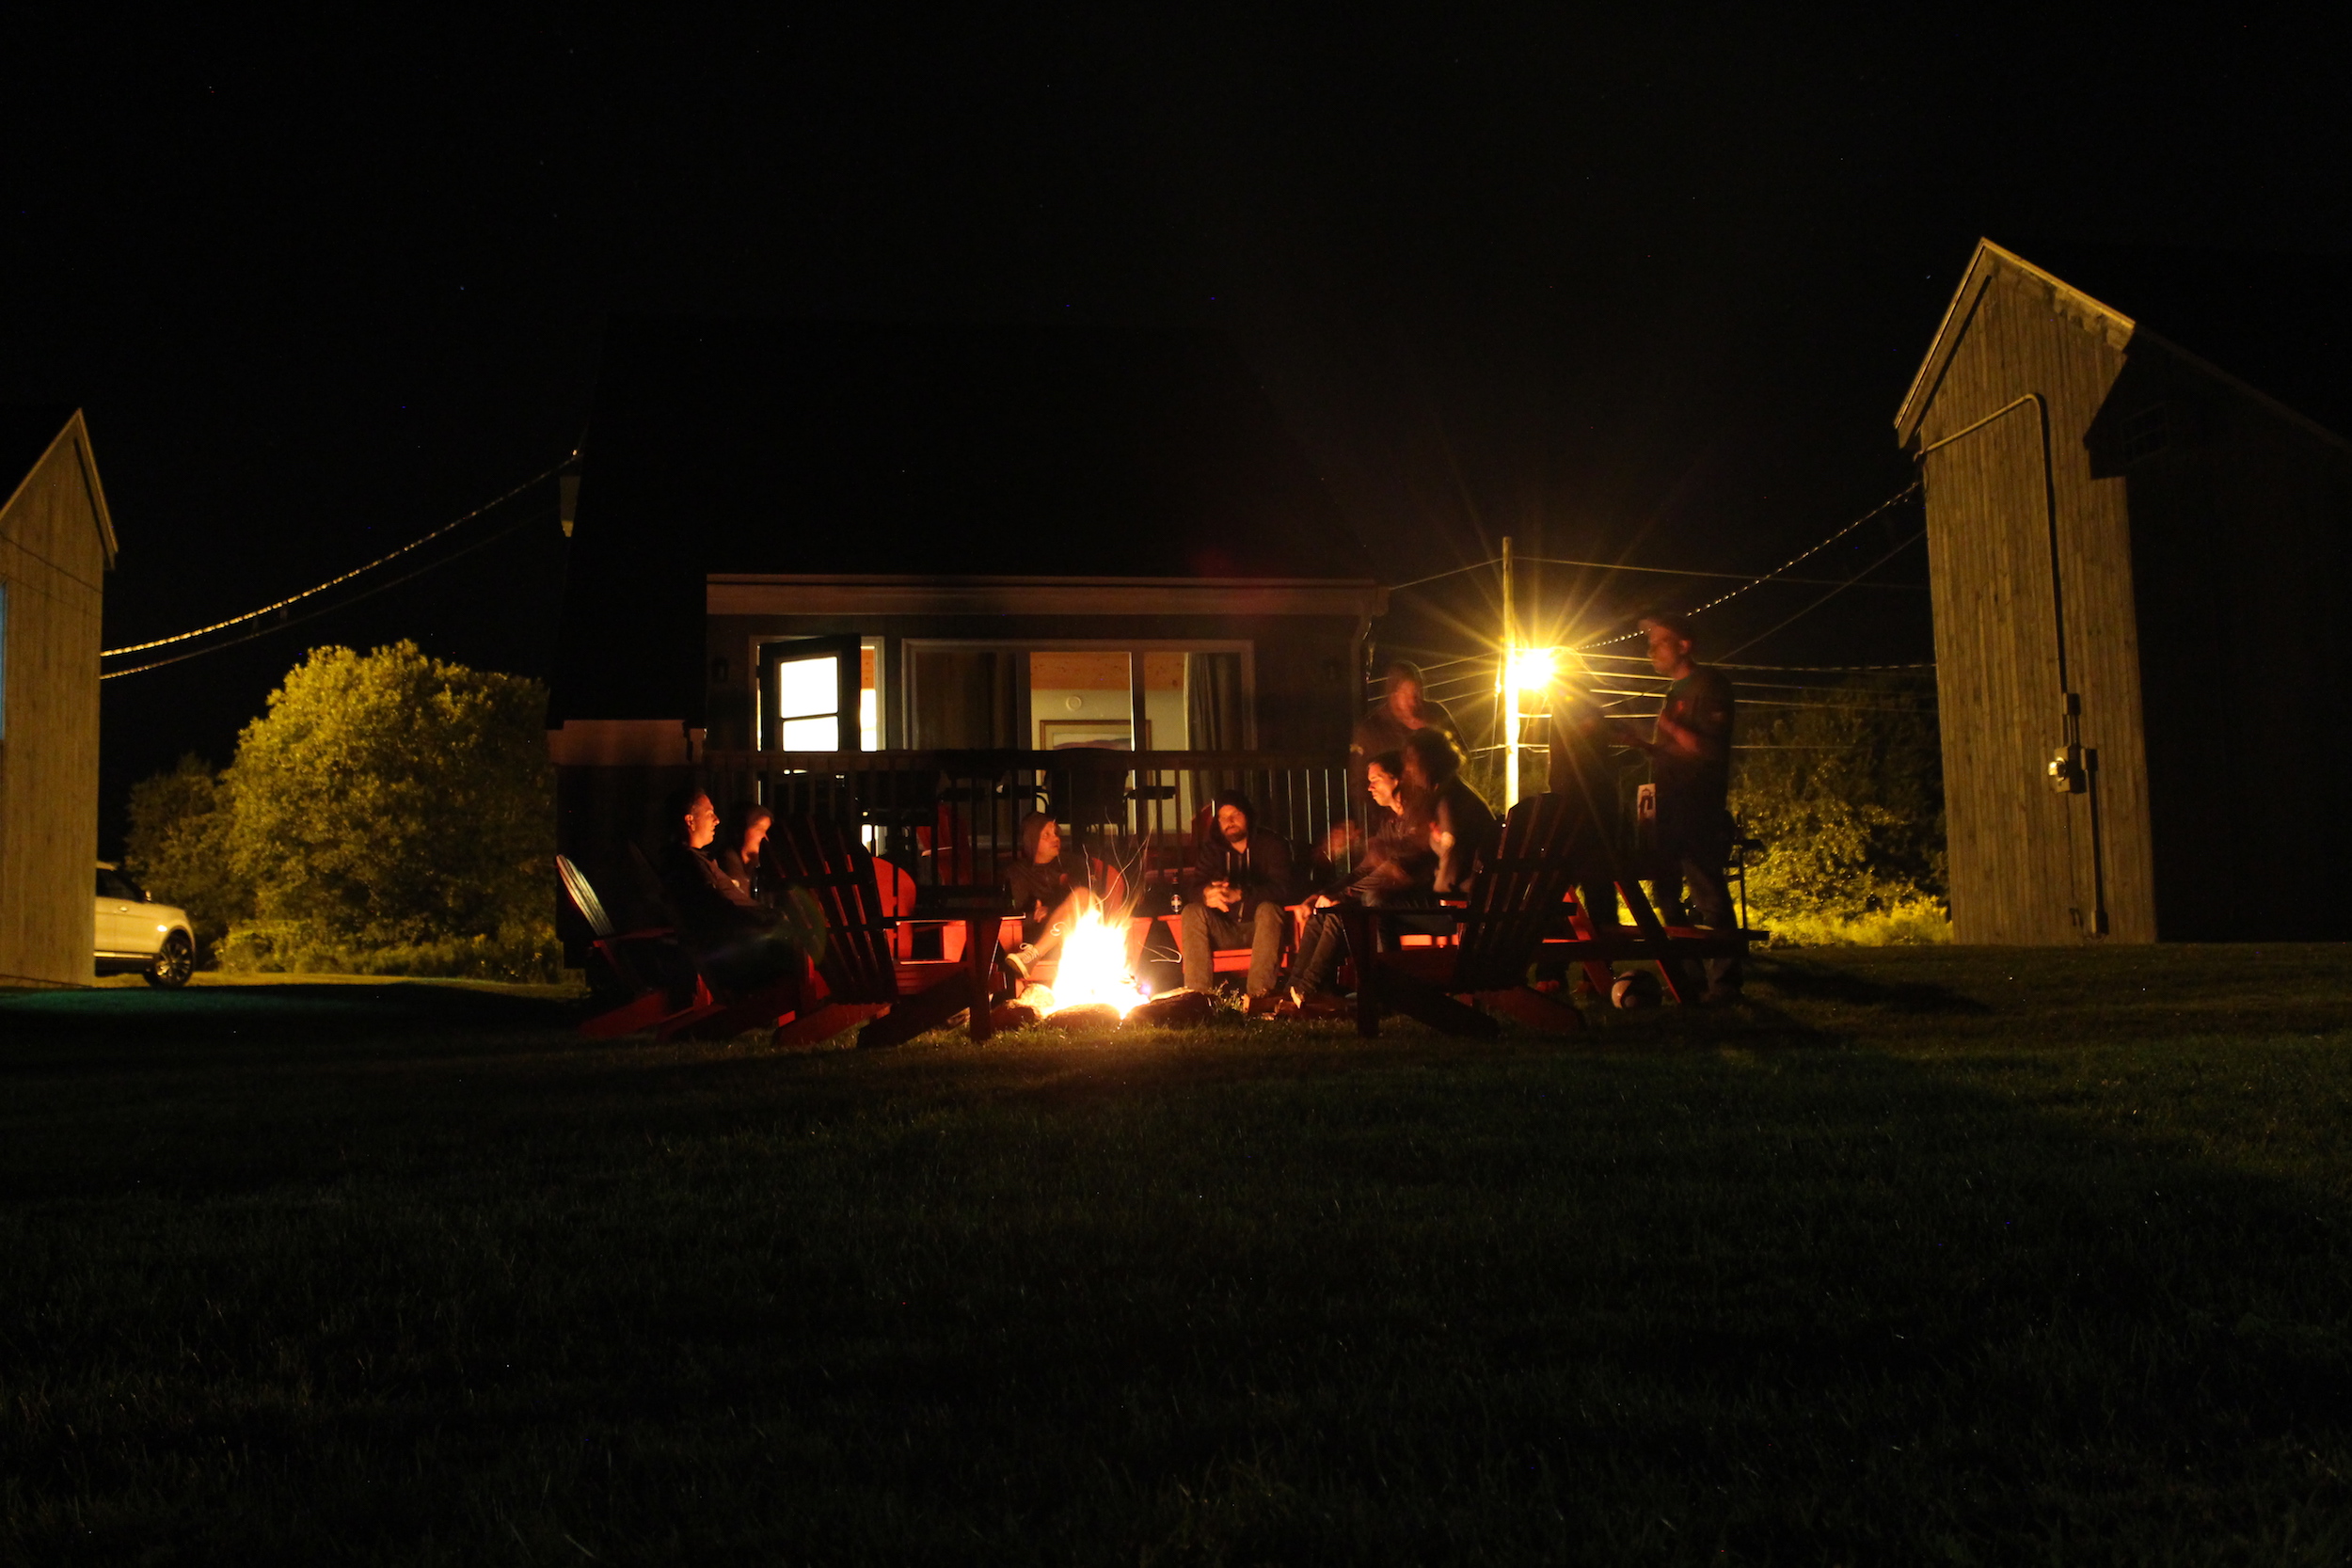 The team gathered around a bonfire